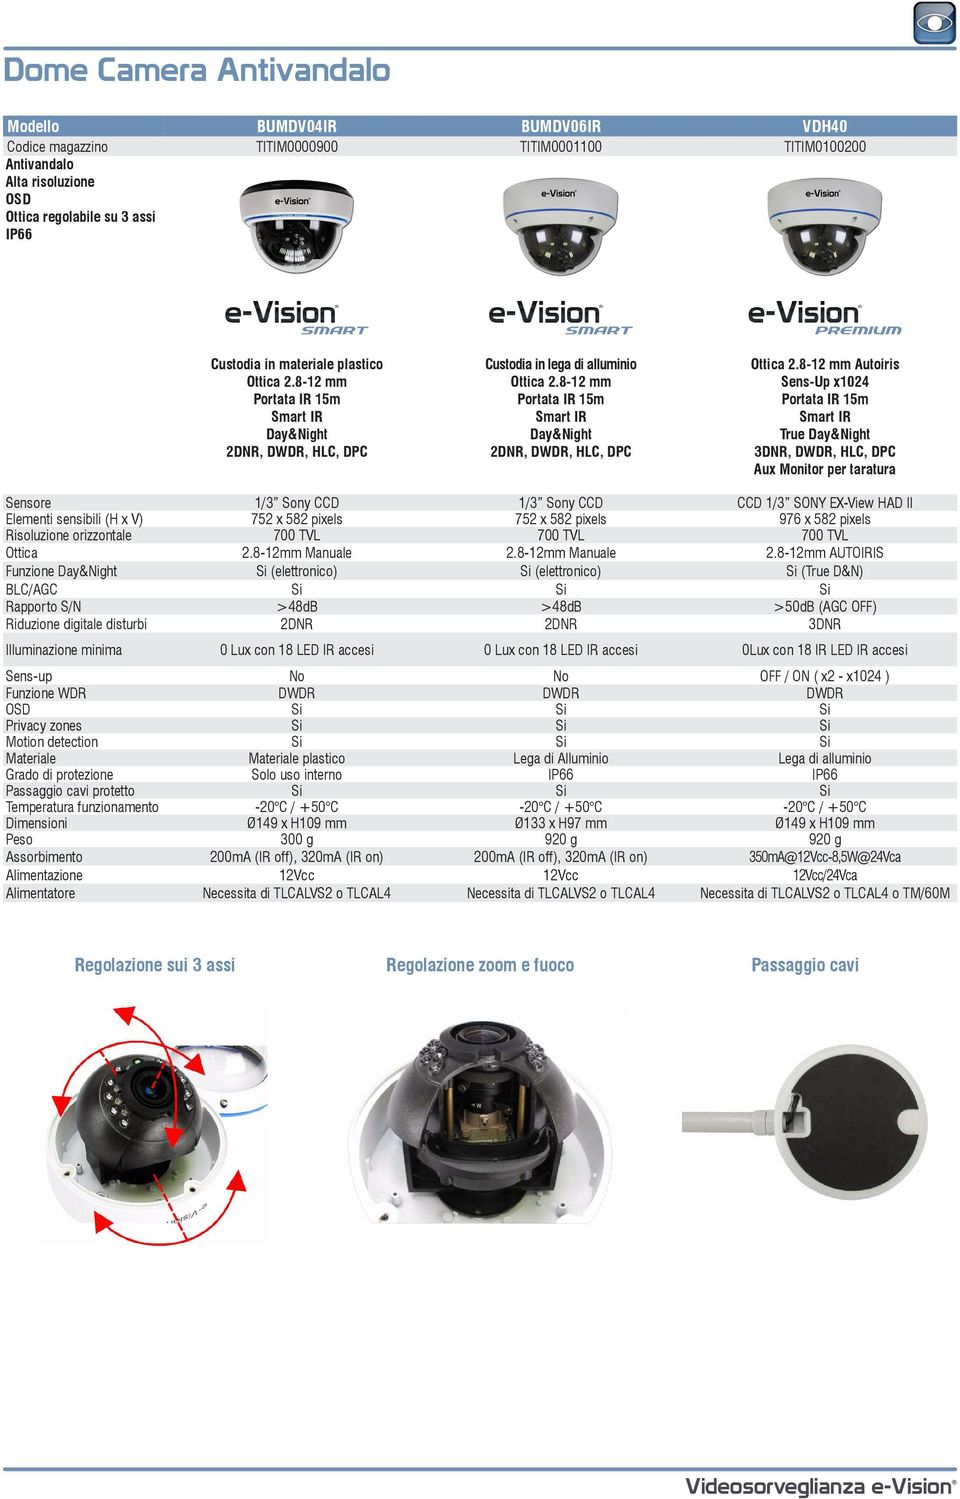 8-12 mm Autoiris Sens-Up x1024 Portata IR 15m 3DNR, DWDR, HLC, DPC Aux Monitor per taratura Sensore 1/3 Sony CCD 1/3 Sony CCD CCD 1/3 SONY EX-View HAD II Elementi sensibili (H x V) 752 x 582 pixels